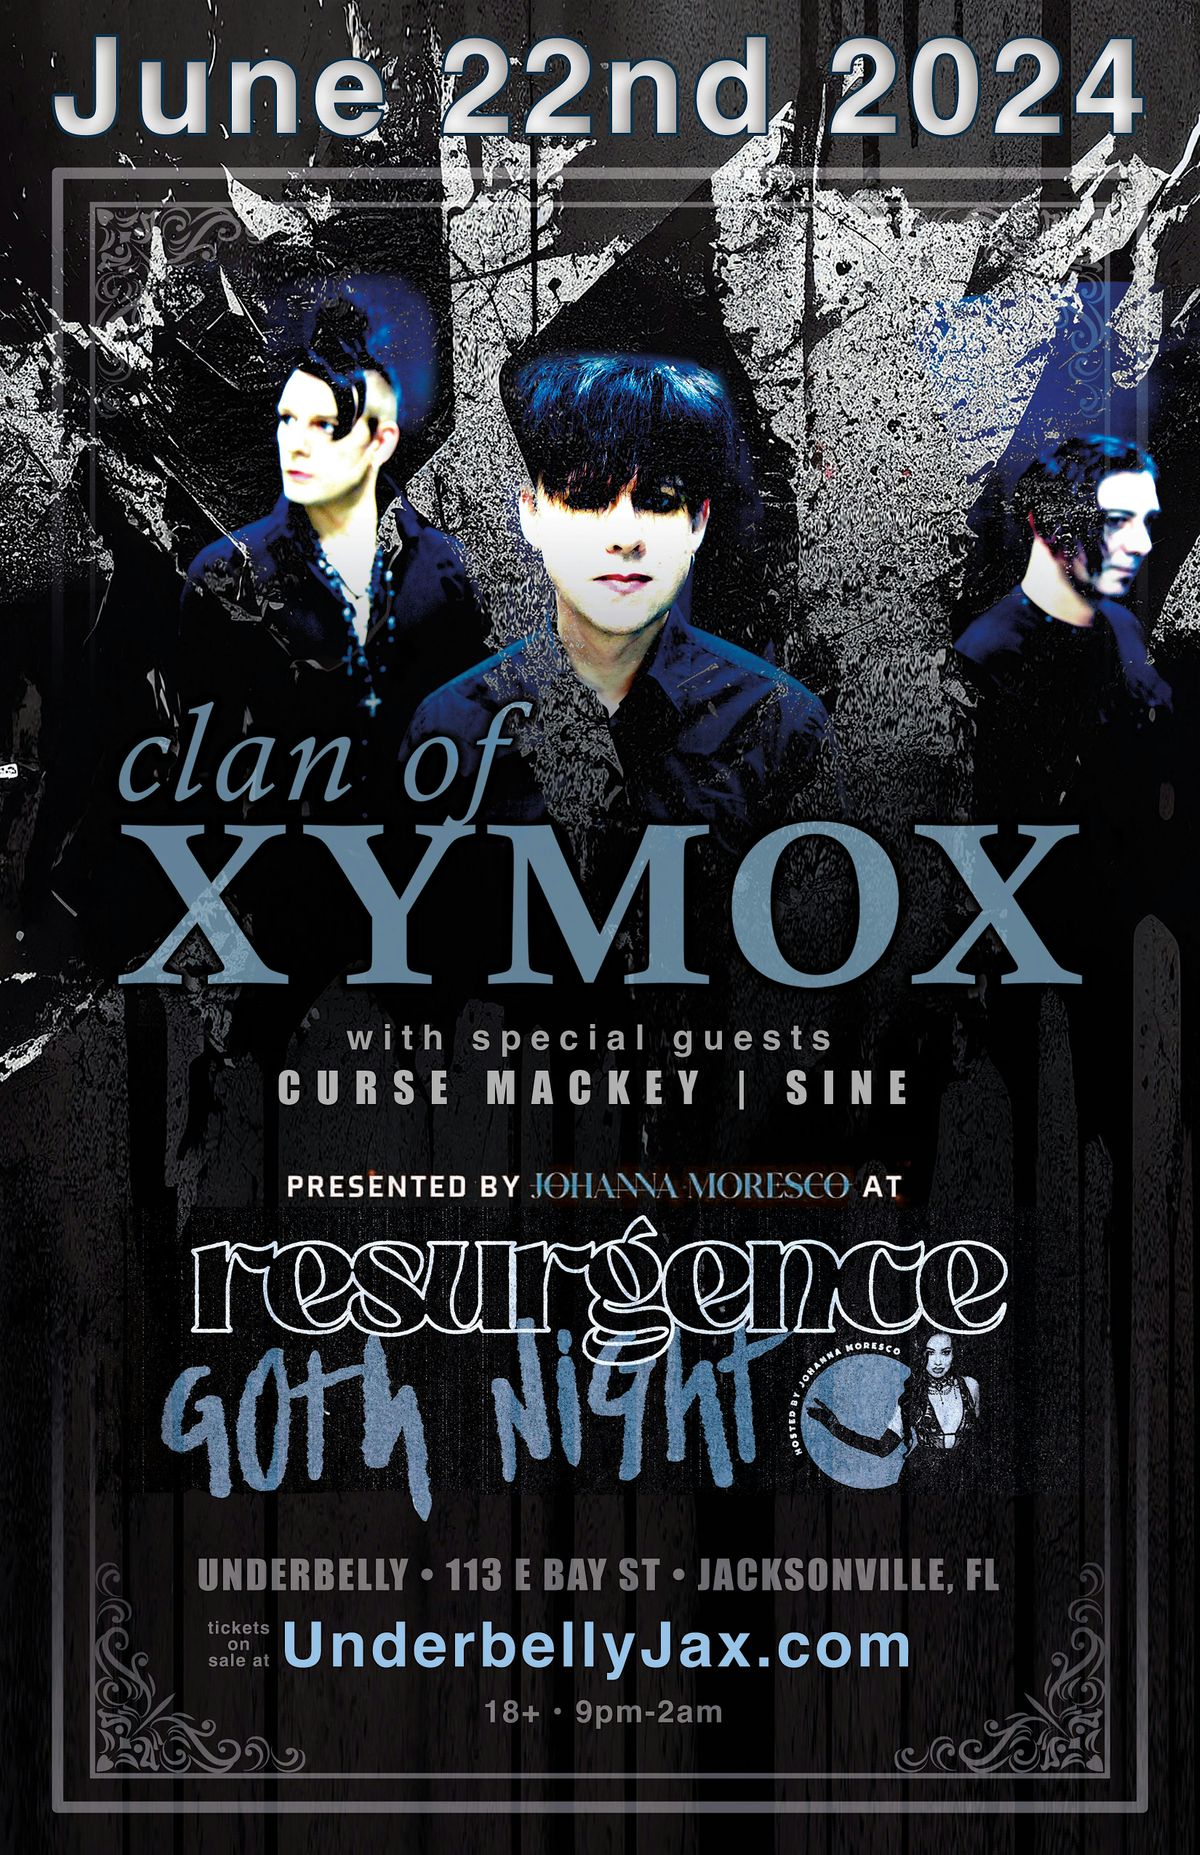 CLAN OF XYMOX live at Resurgence Goth Night (Underbelly)